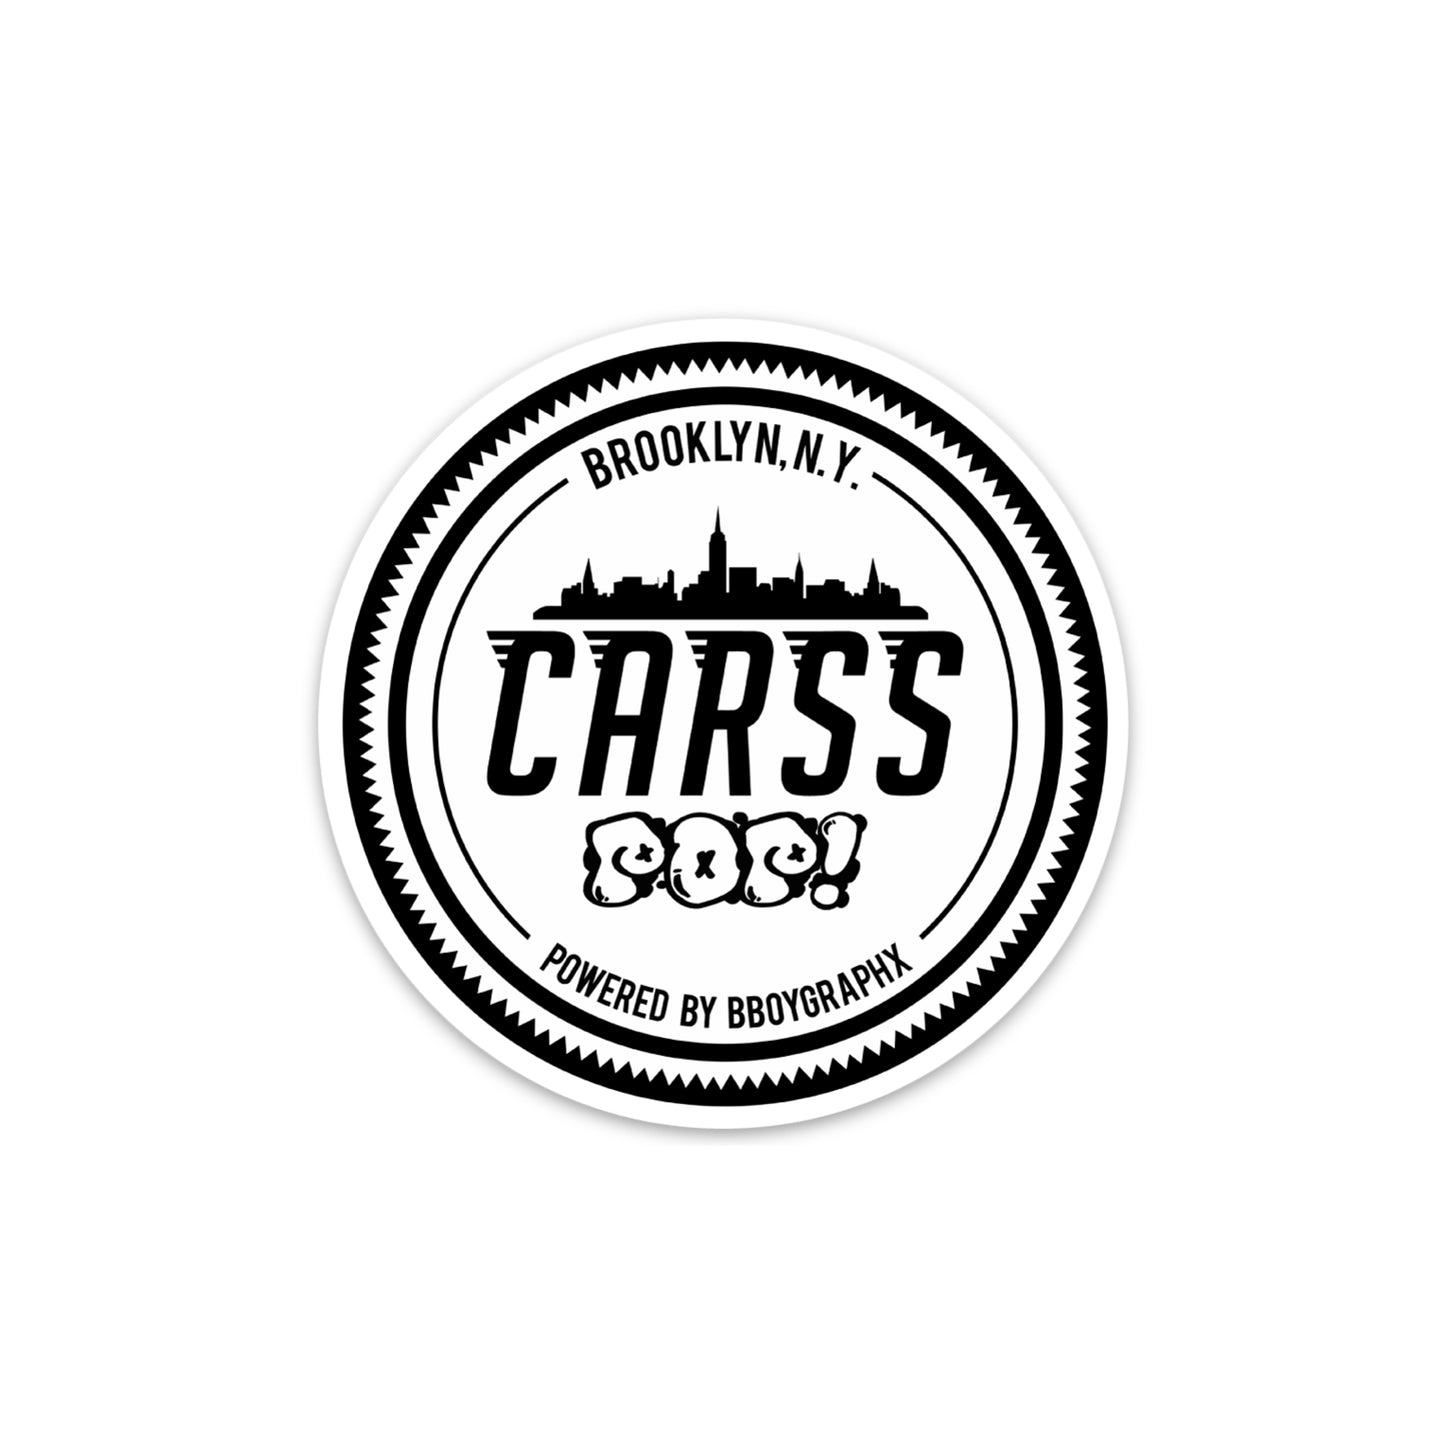 CarSs Pop Logo Sticker